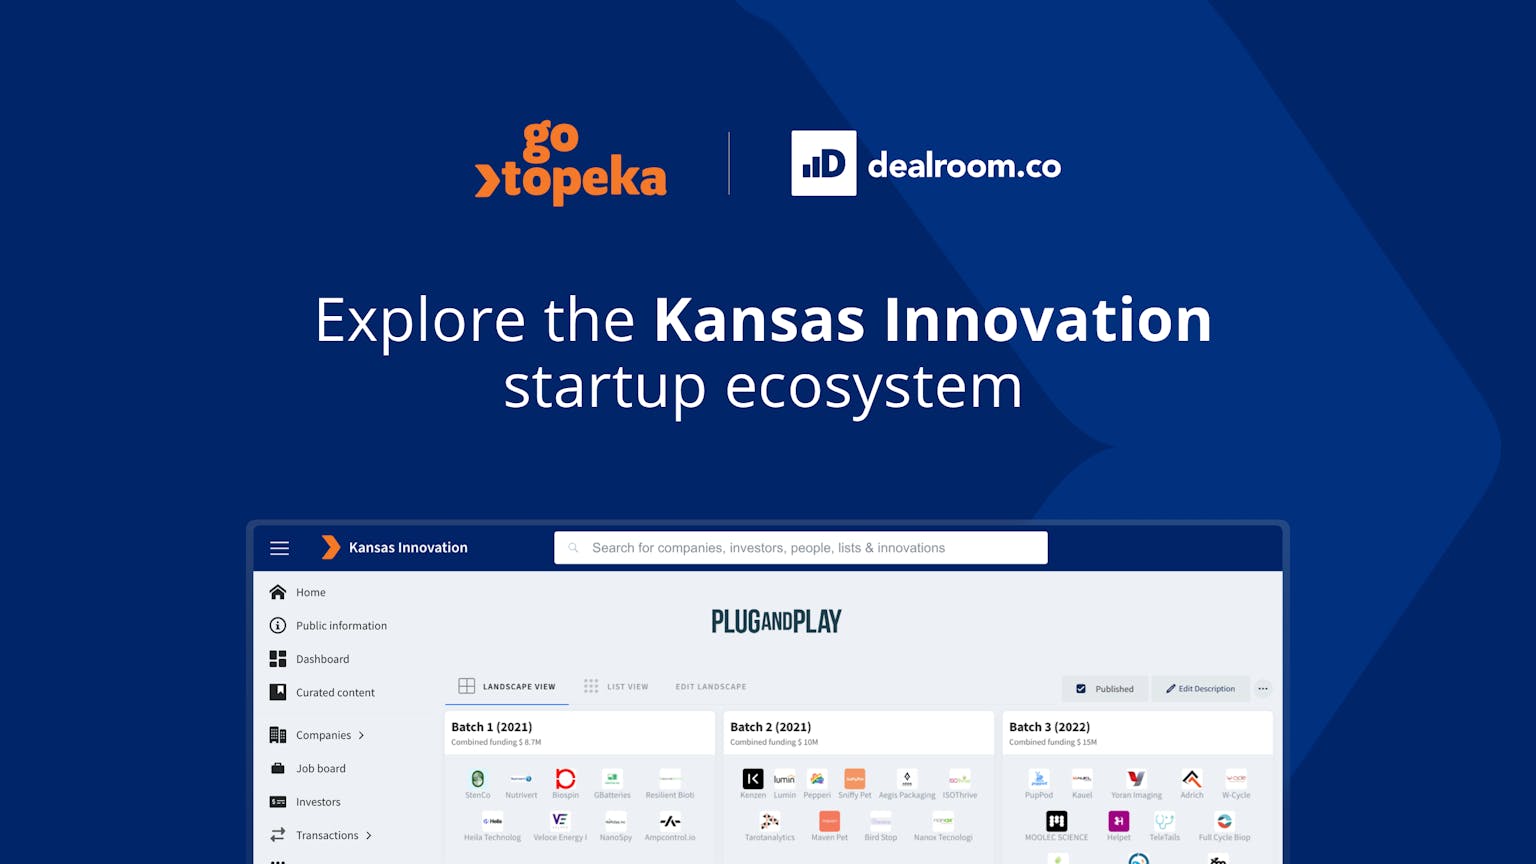 Explore the Kansas innovation ecosystem